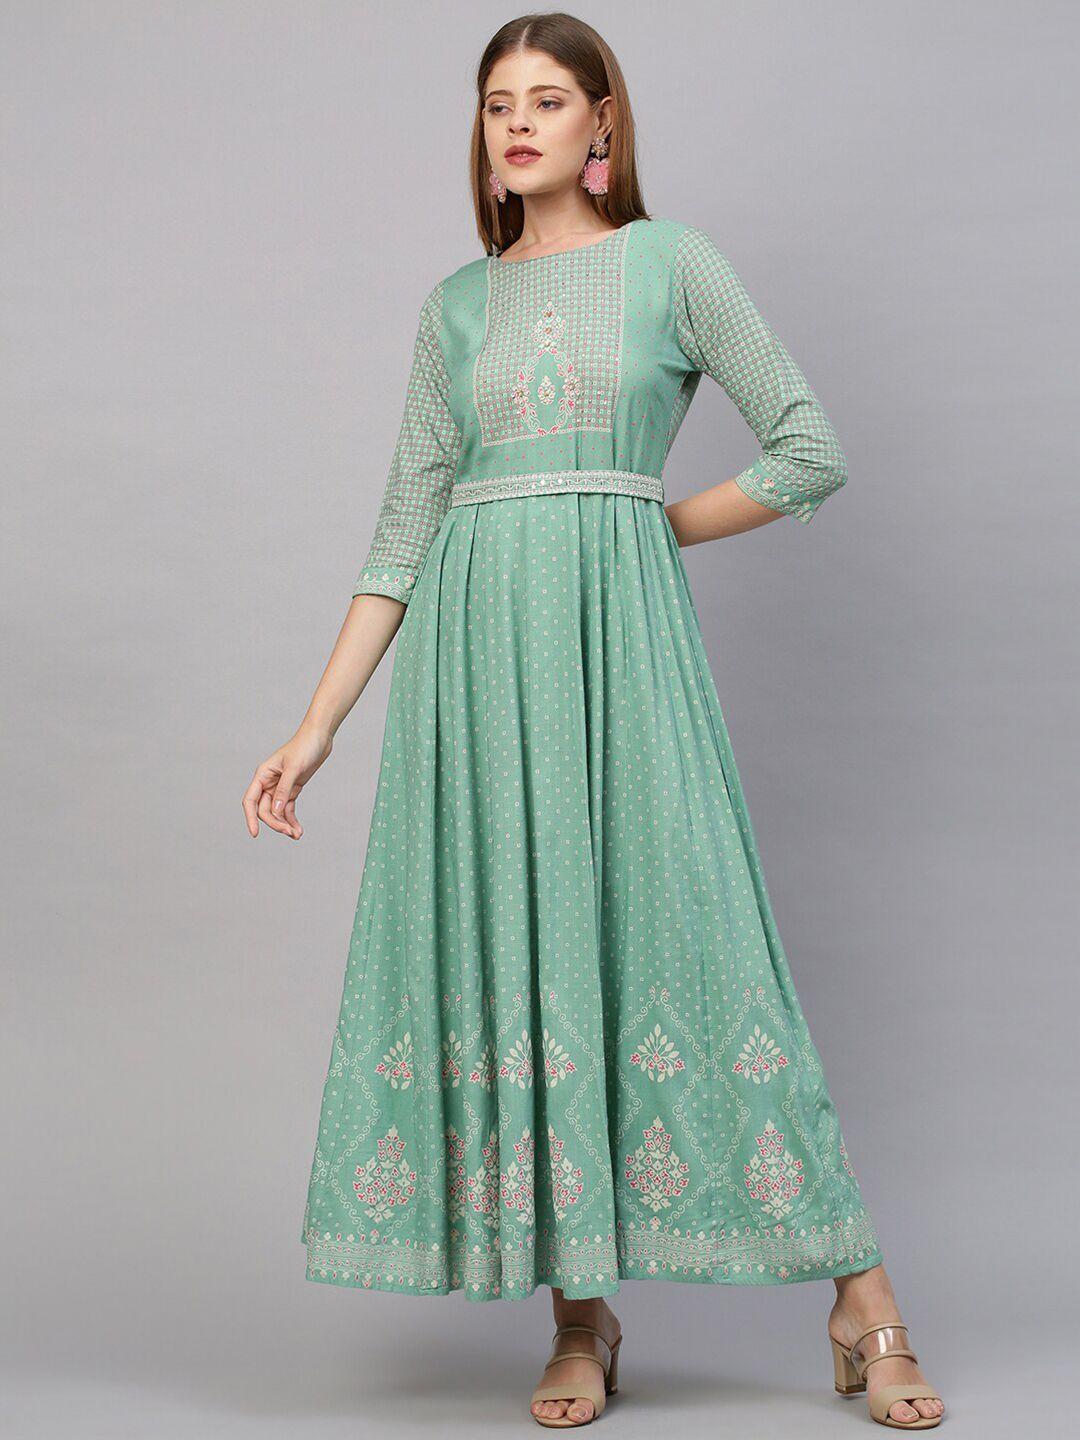 fashor green ethnic motifs embroidered ethnic maxi dress